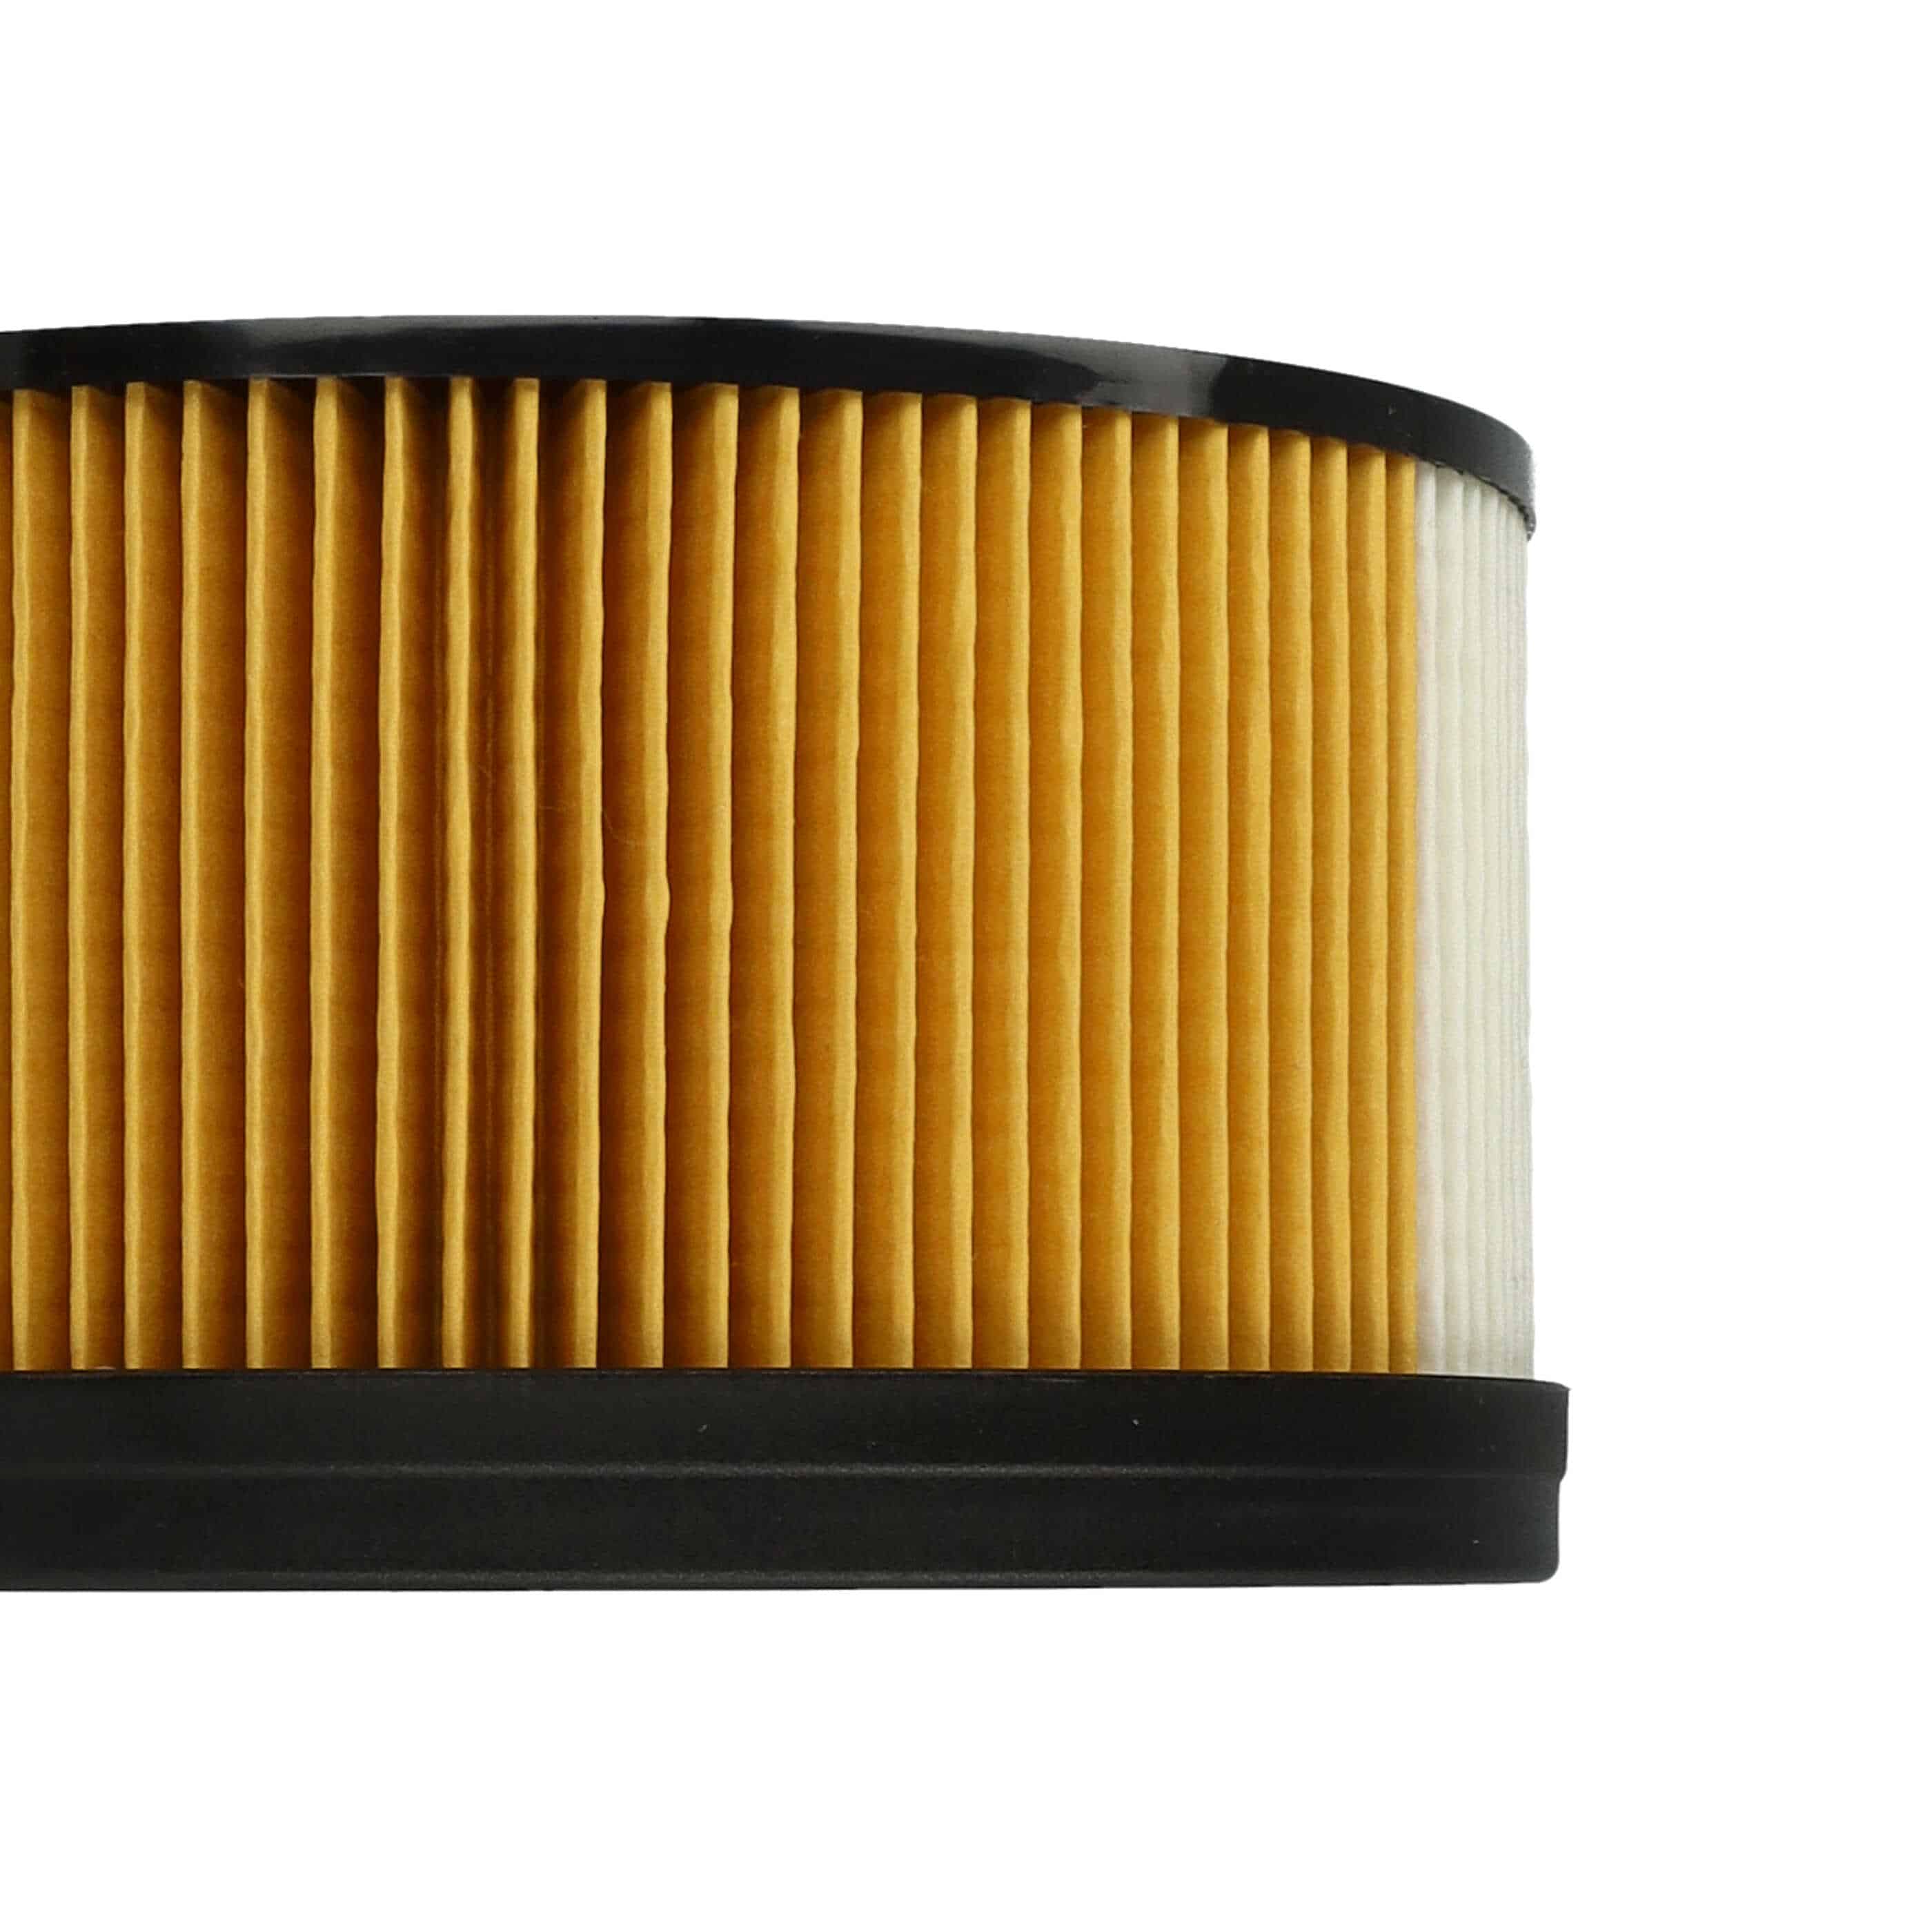 1x cartridge filter replaces Kärcher 6.414-960.0 for Kärcher Vacuum Cleaner, yellow / black